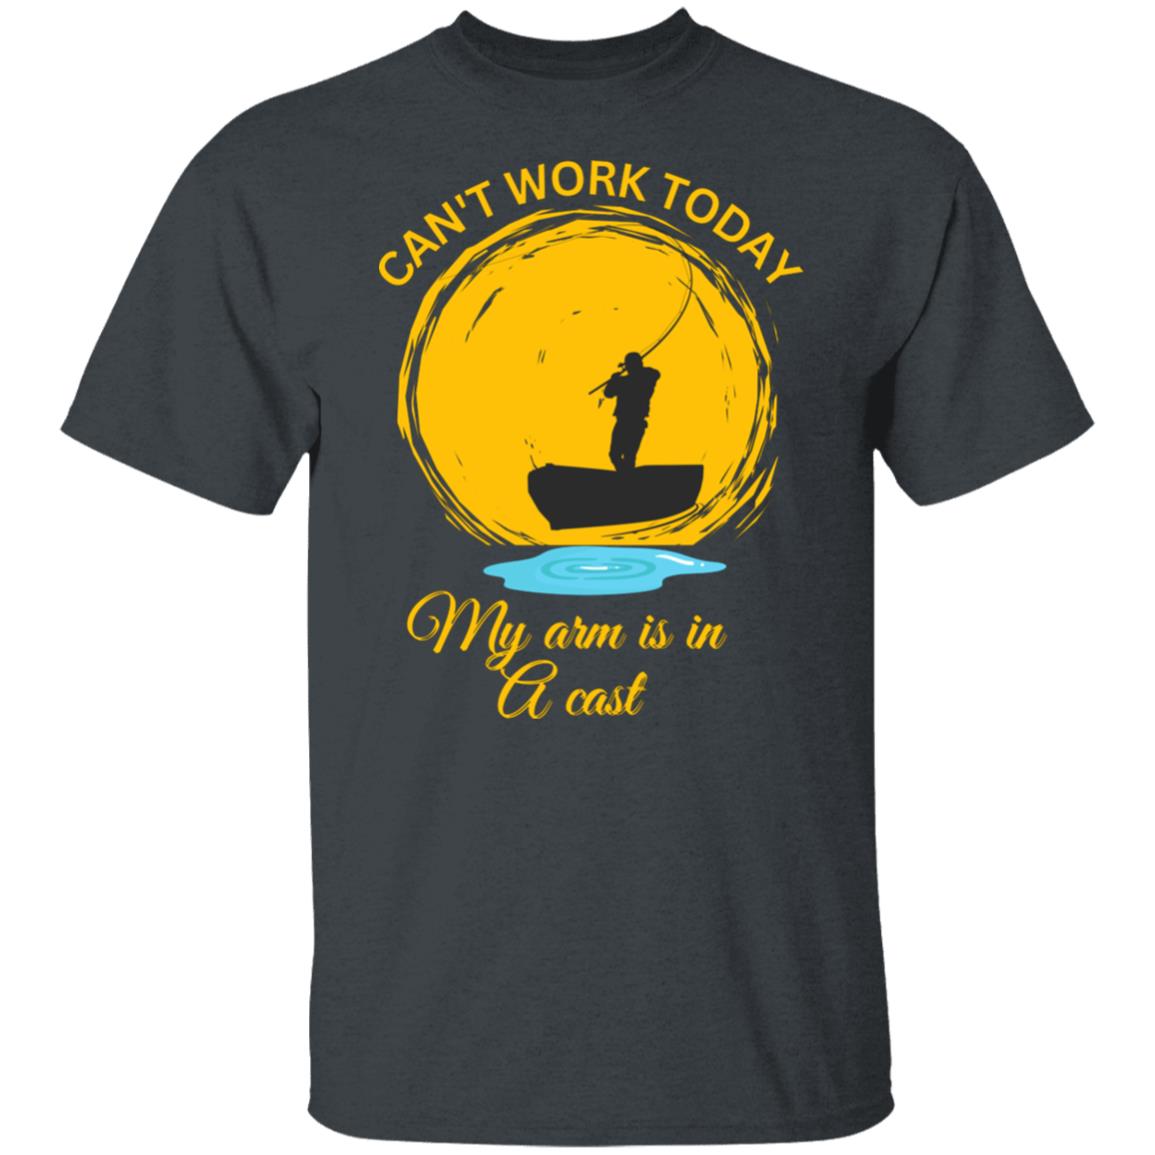 Mens Fishing T shirt, Funny Fishing Shirt, Fishing Graphic Tee